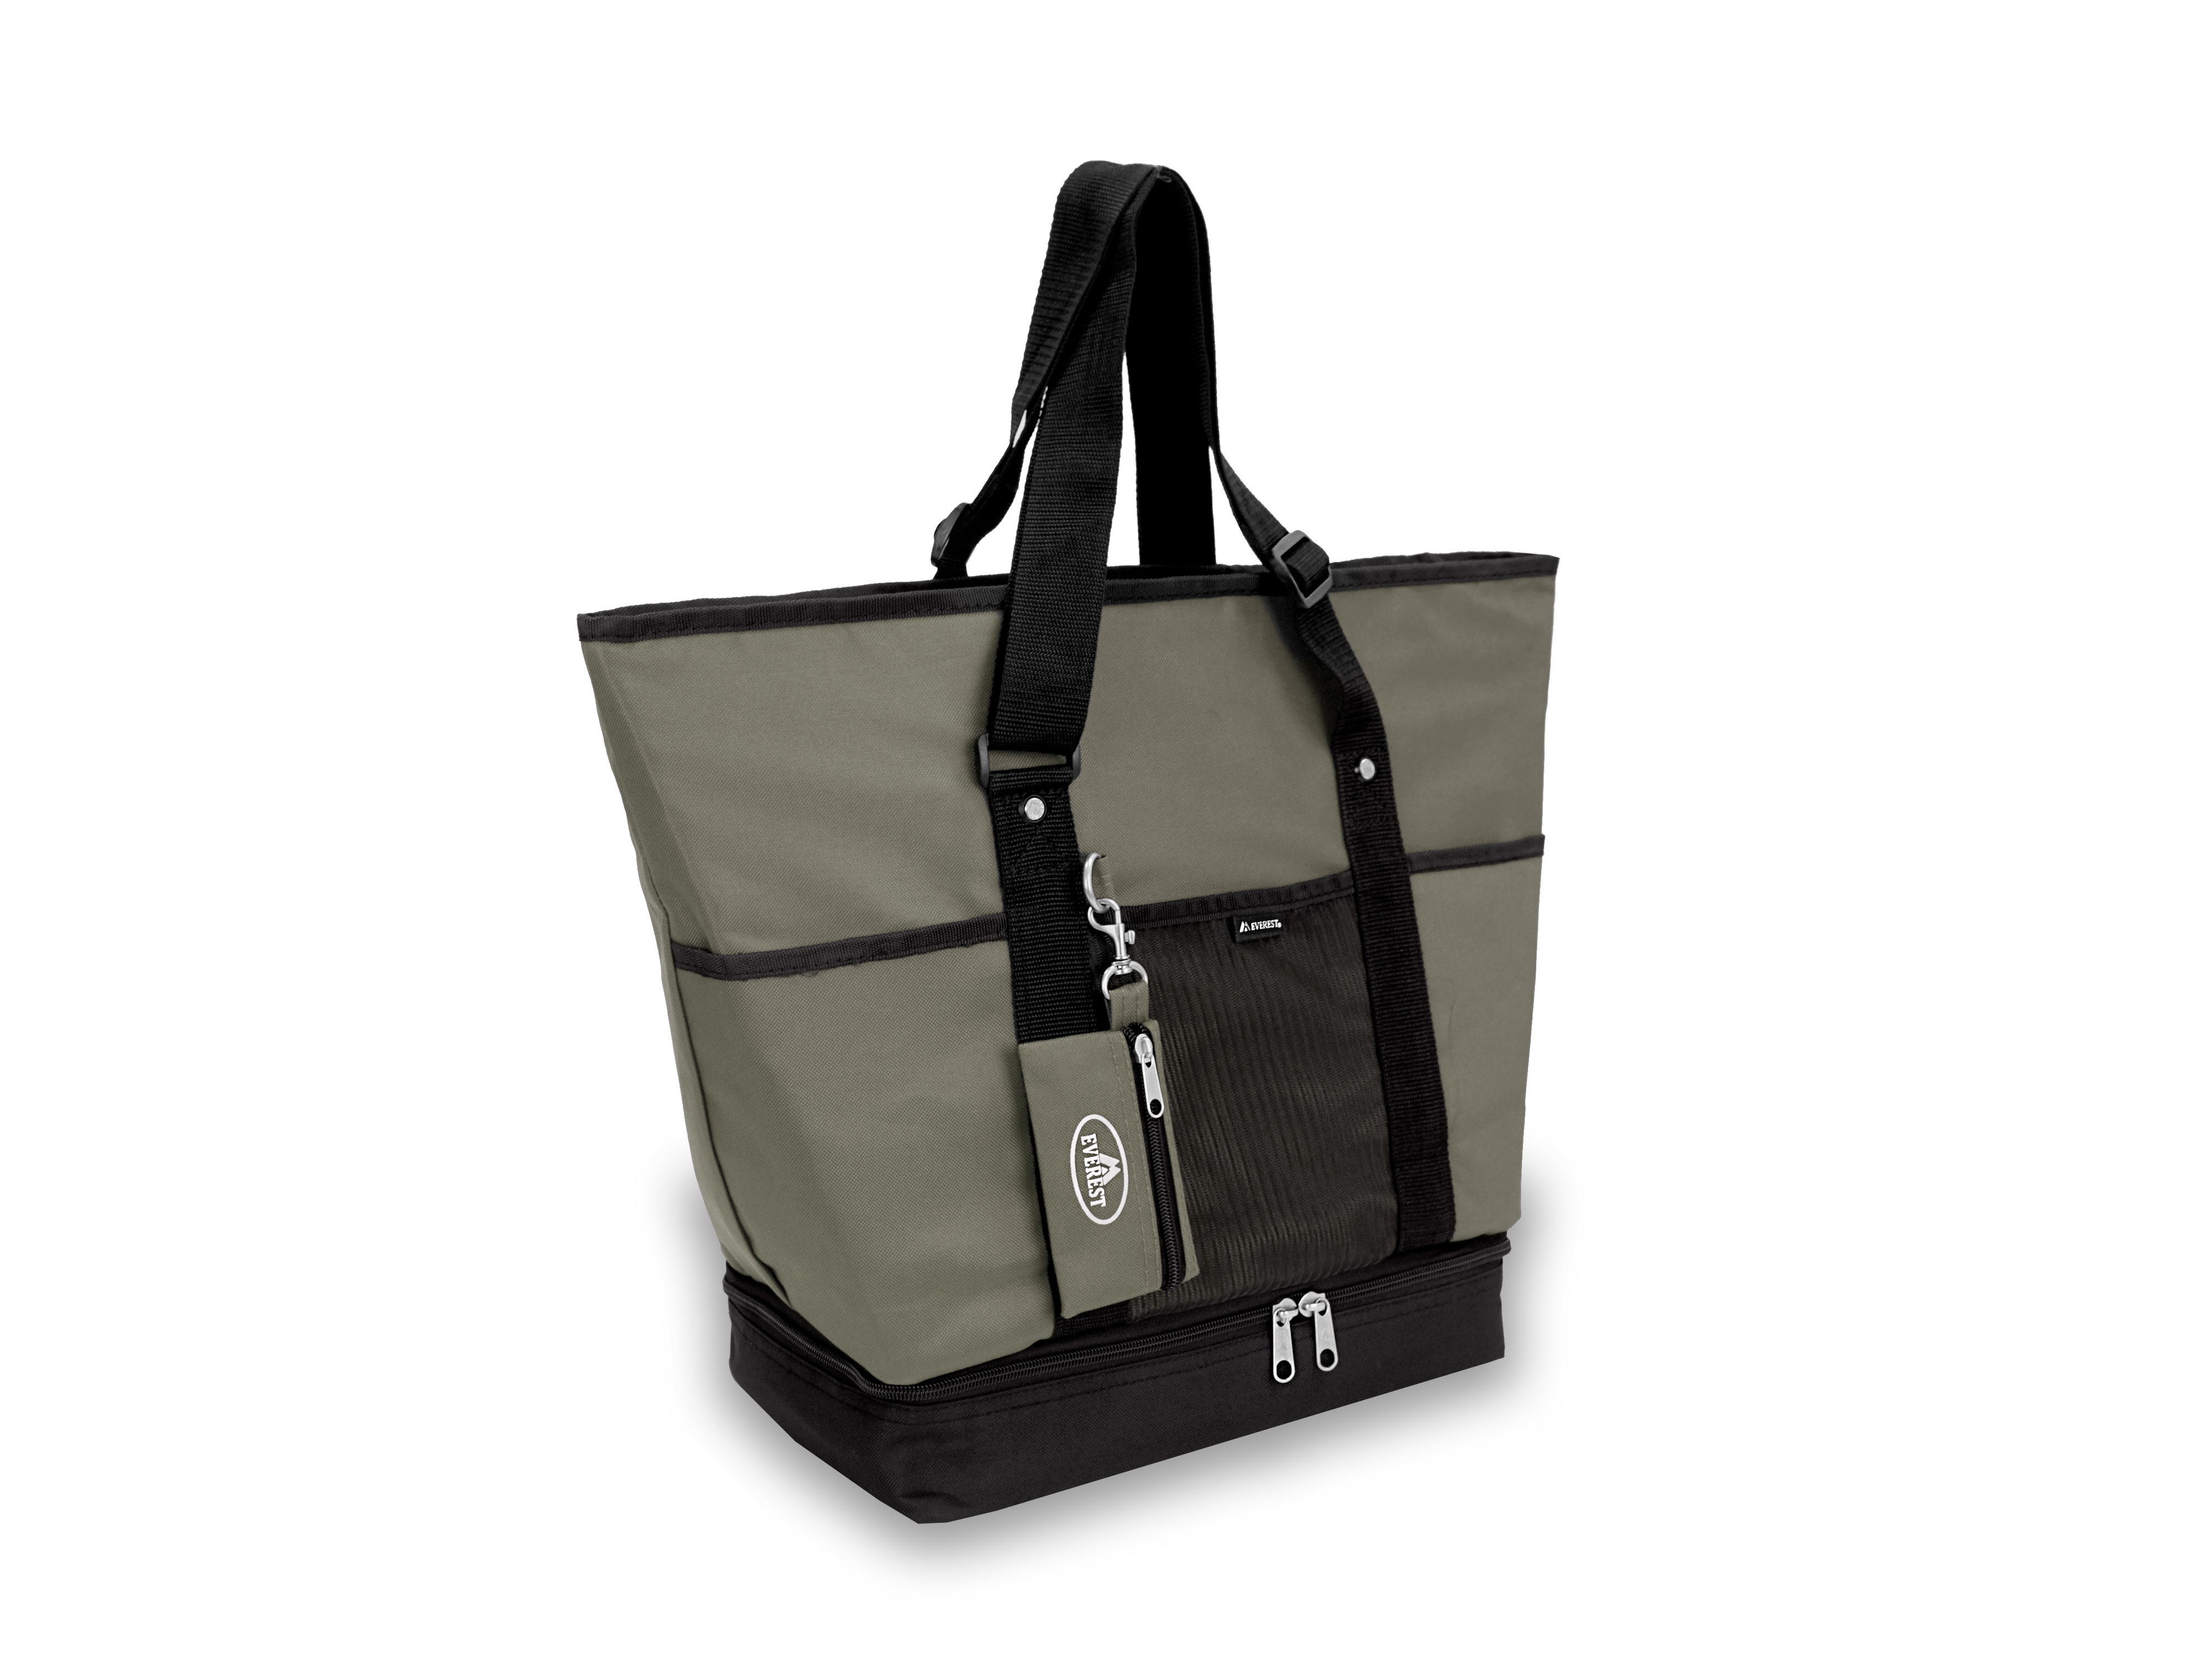 Everest Unisex Deluxe Shopping Tote Bag Khaki - image 2 of 4